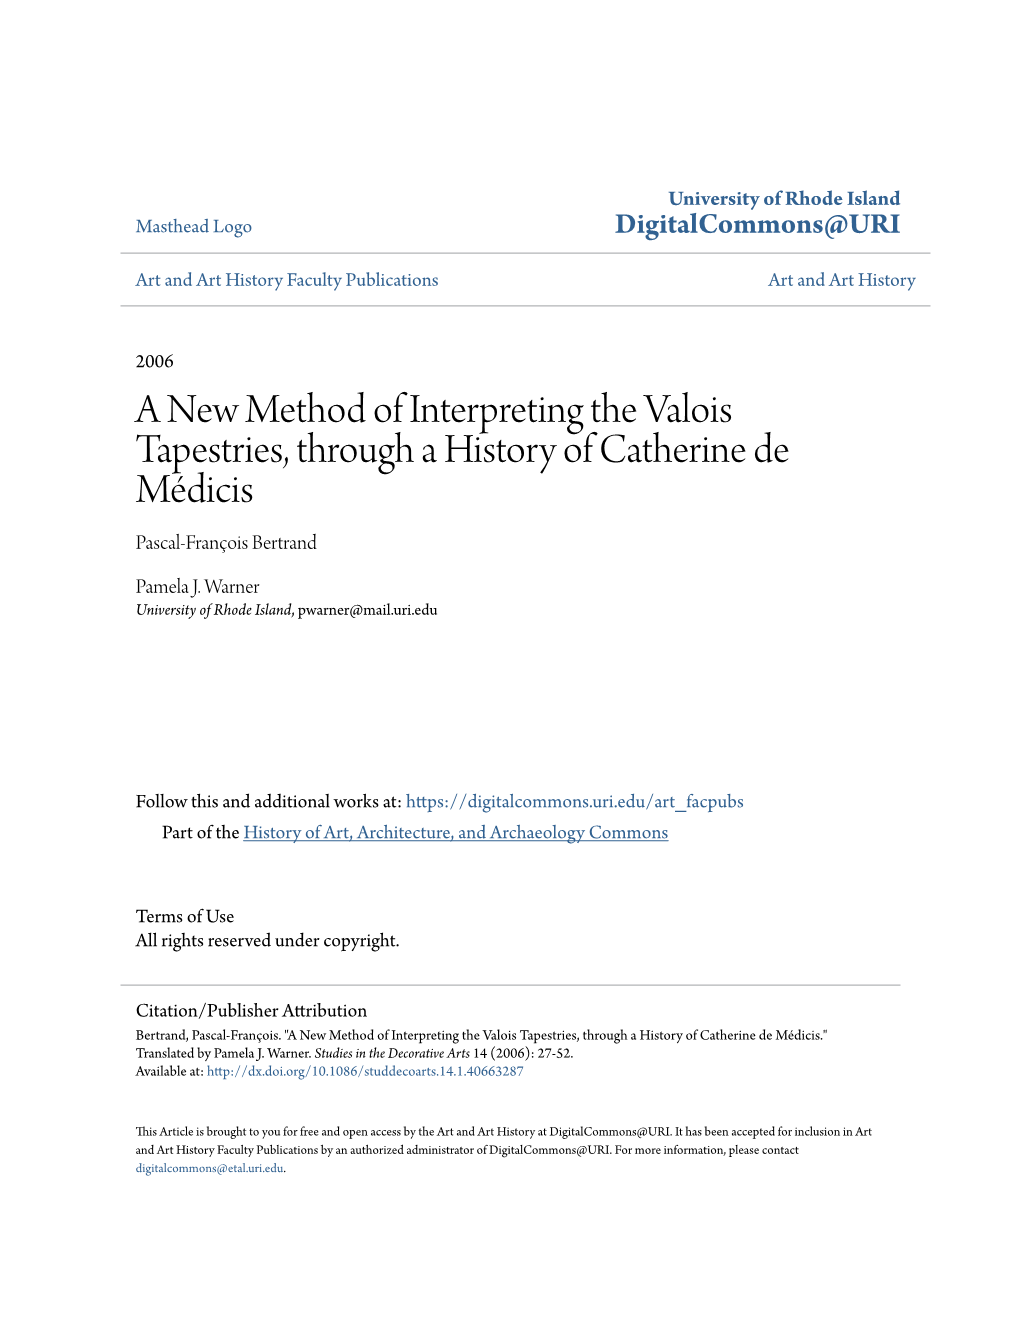 A New Method of Interpreting the Valois Tapestries, Through a History of Catherine De Médicis Pascal-François Bertrand